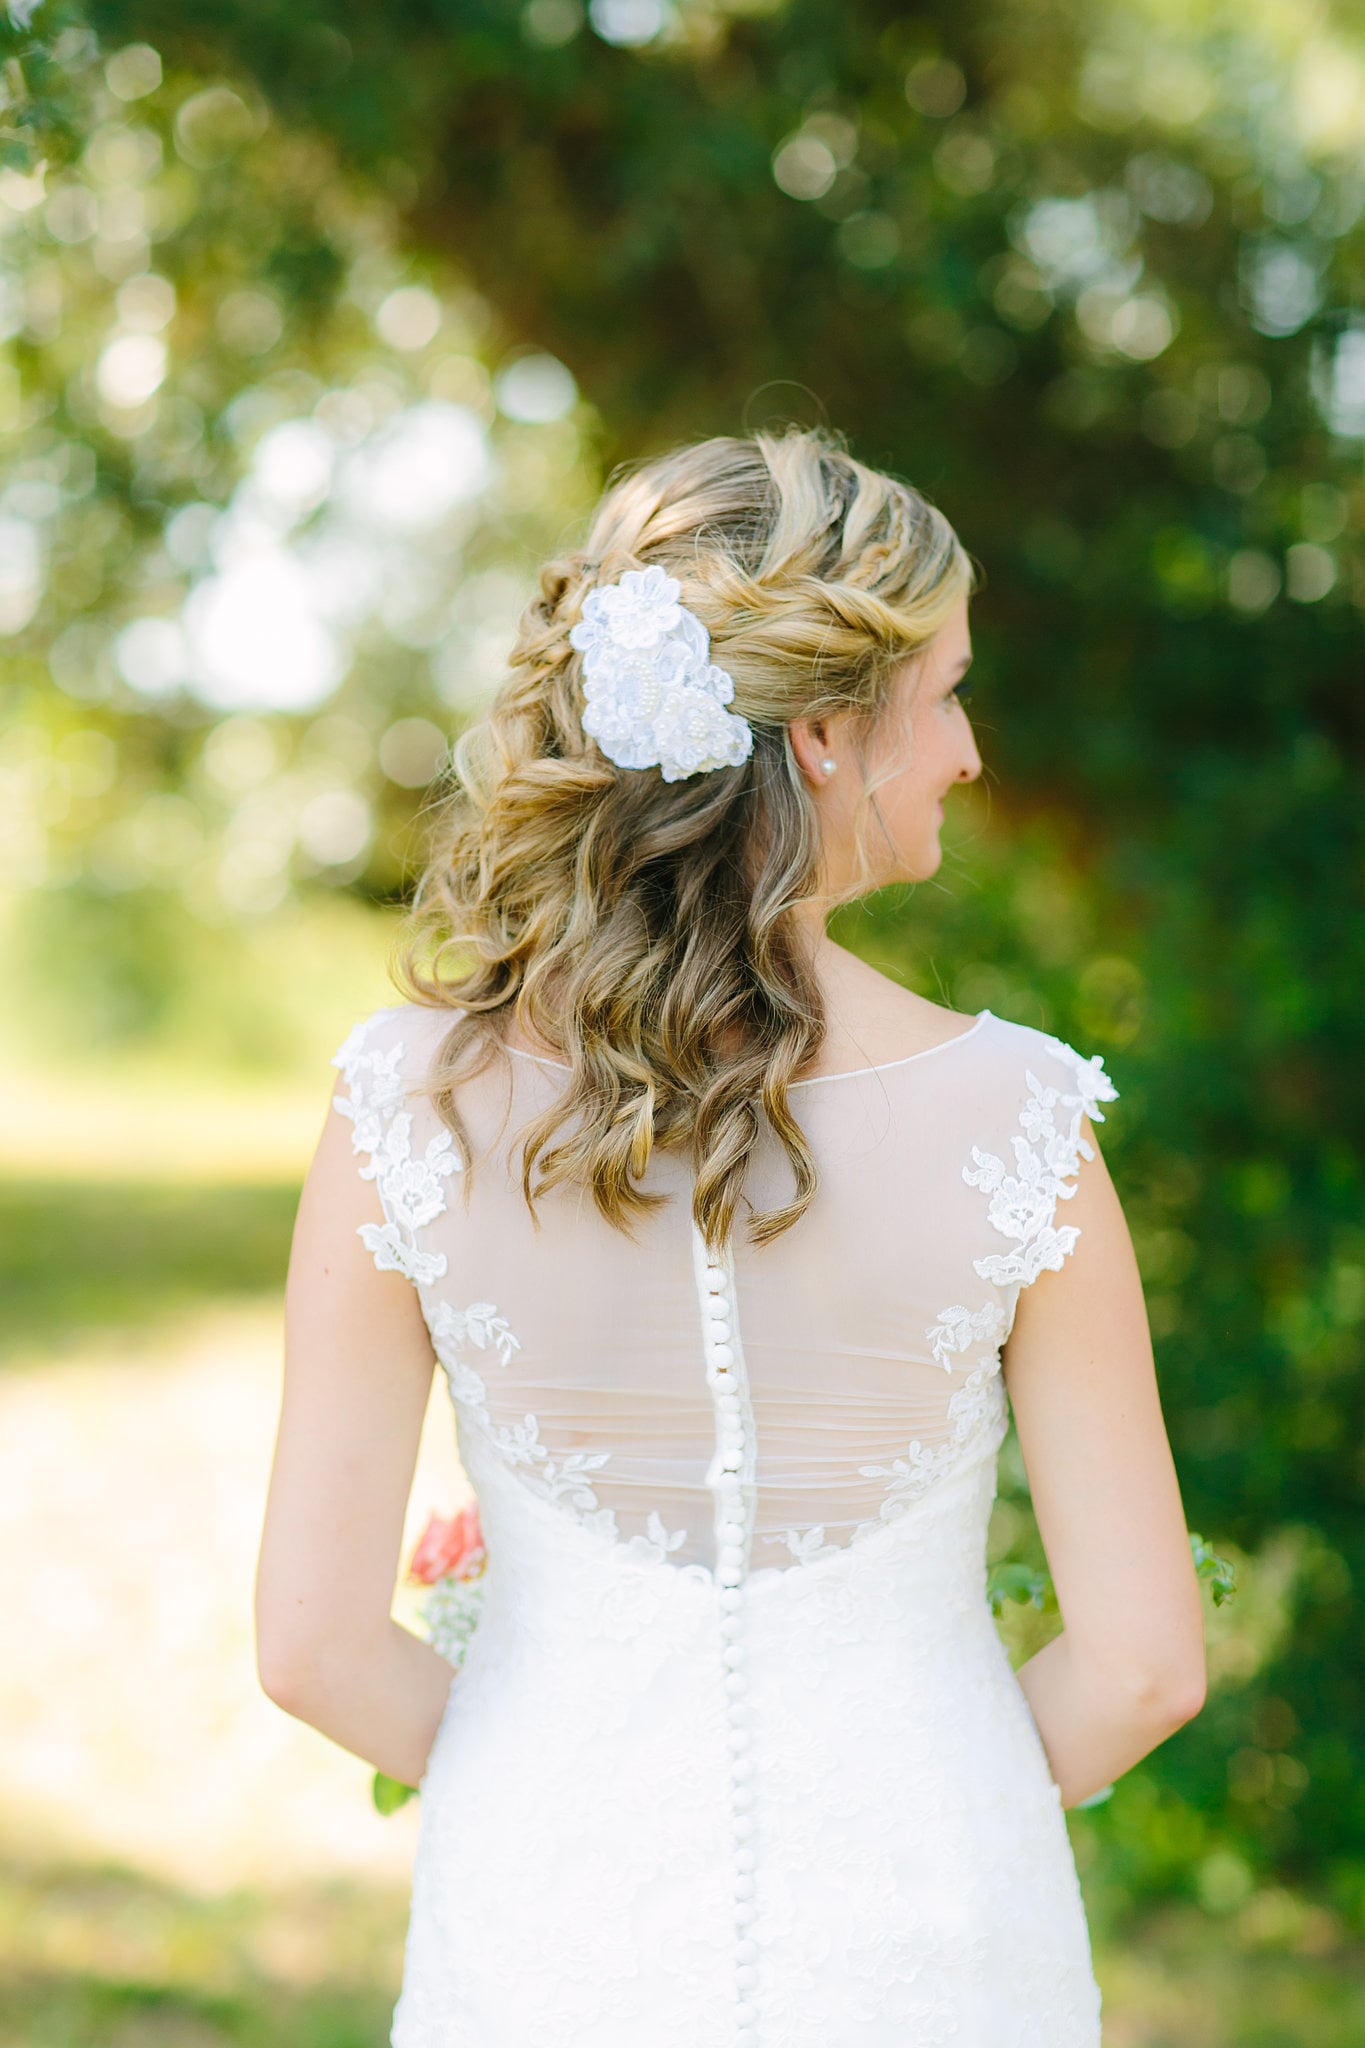 Wedding Hair With Flowers | POPSUGAR Beauty